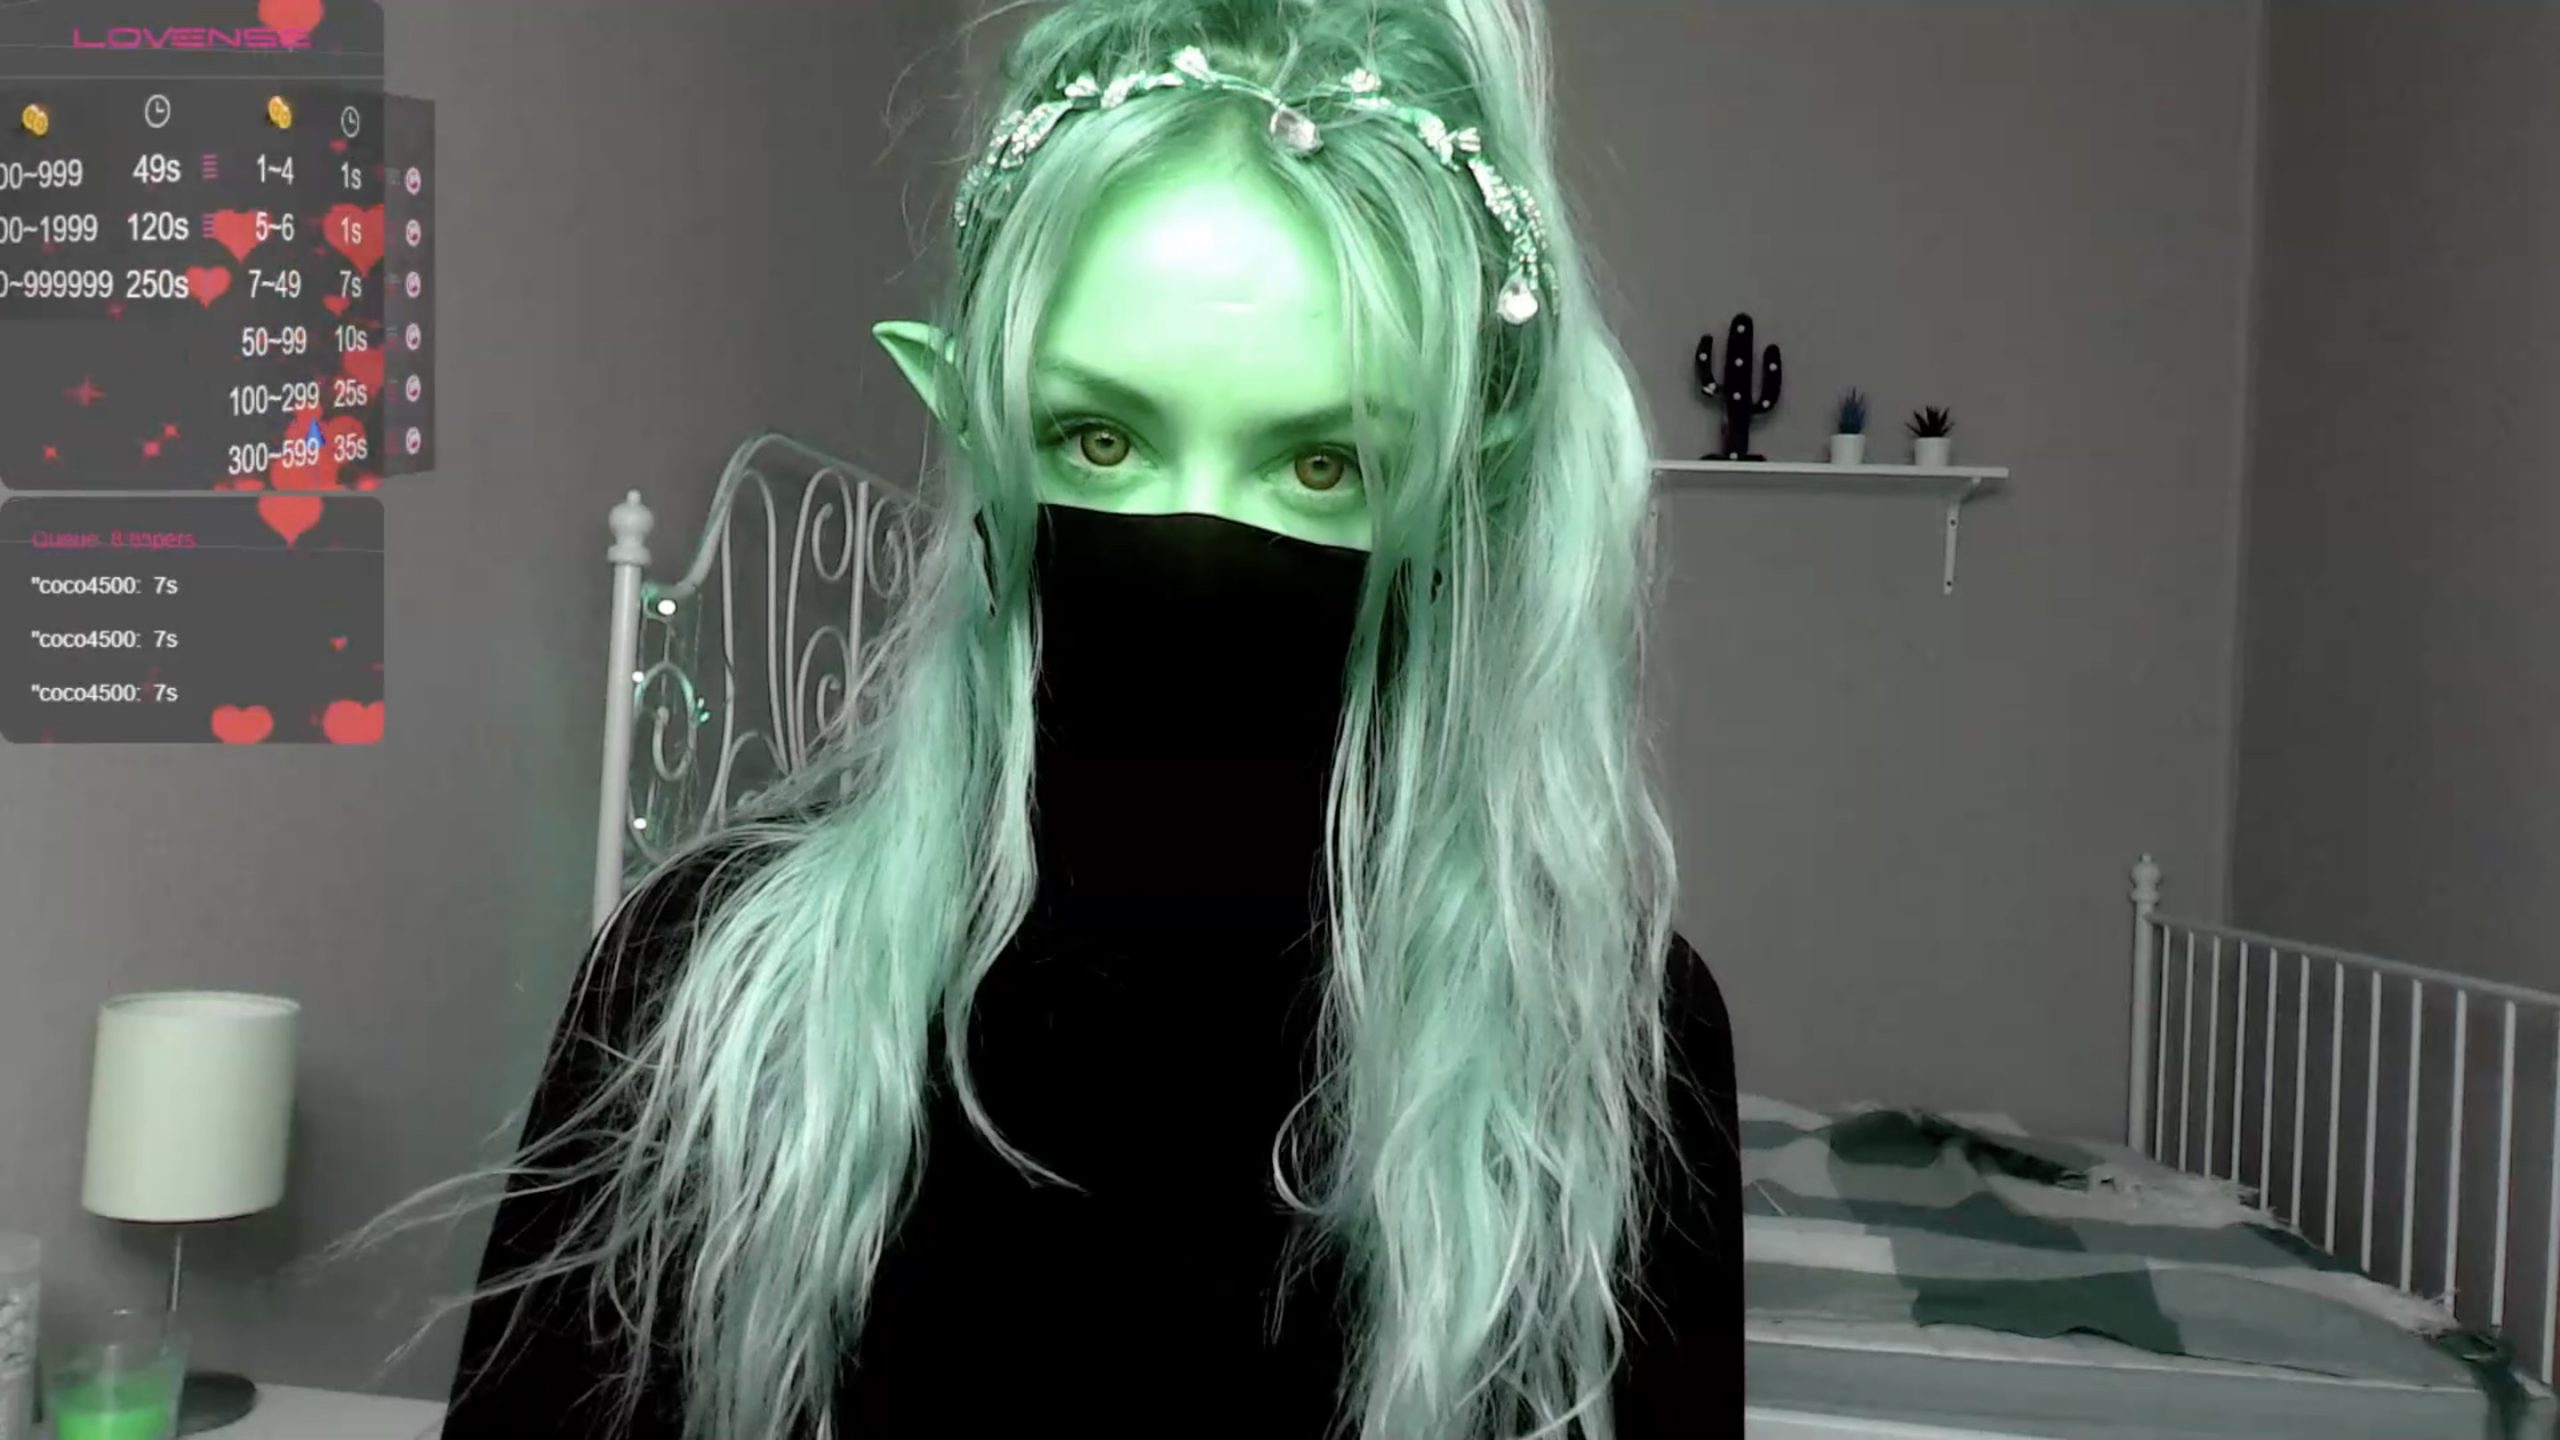 Elven_Dust Leaves Her Mask On